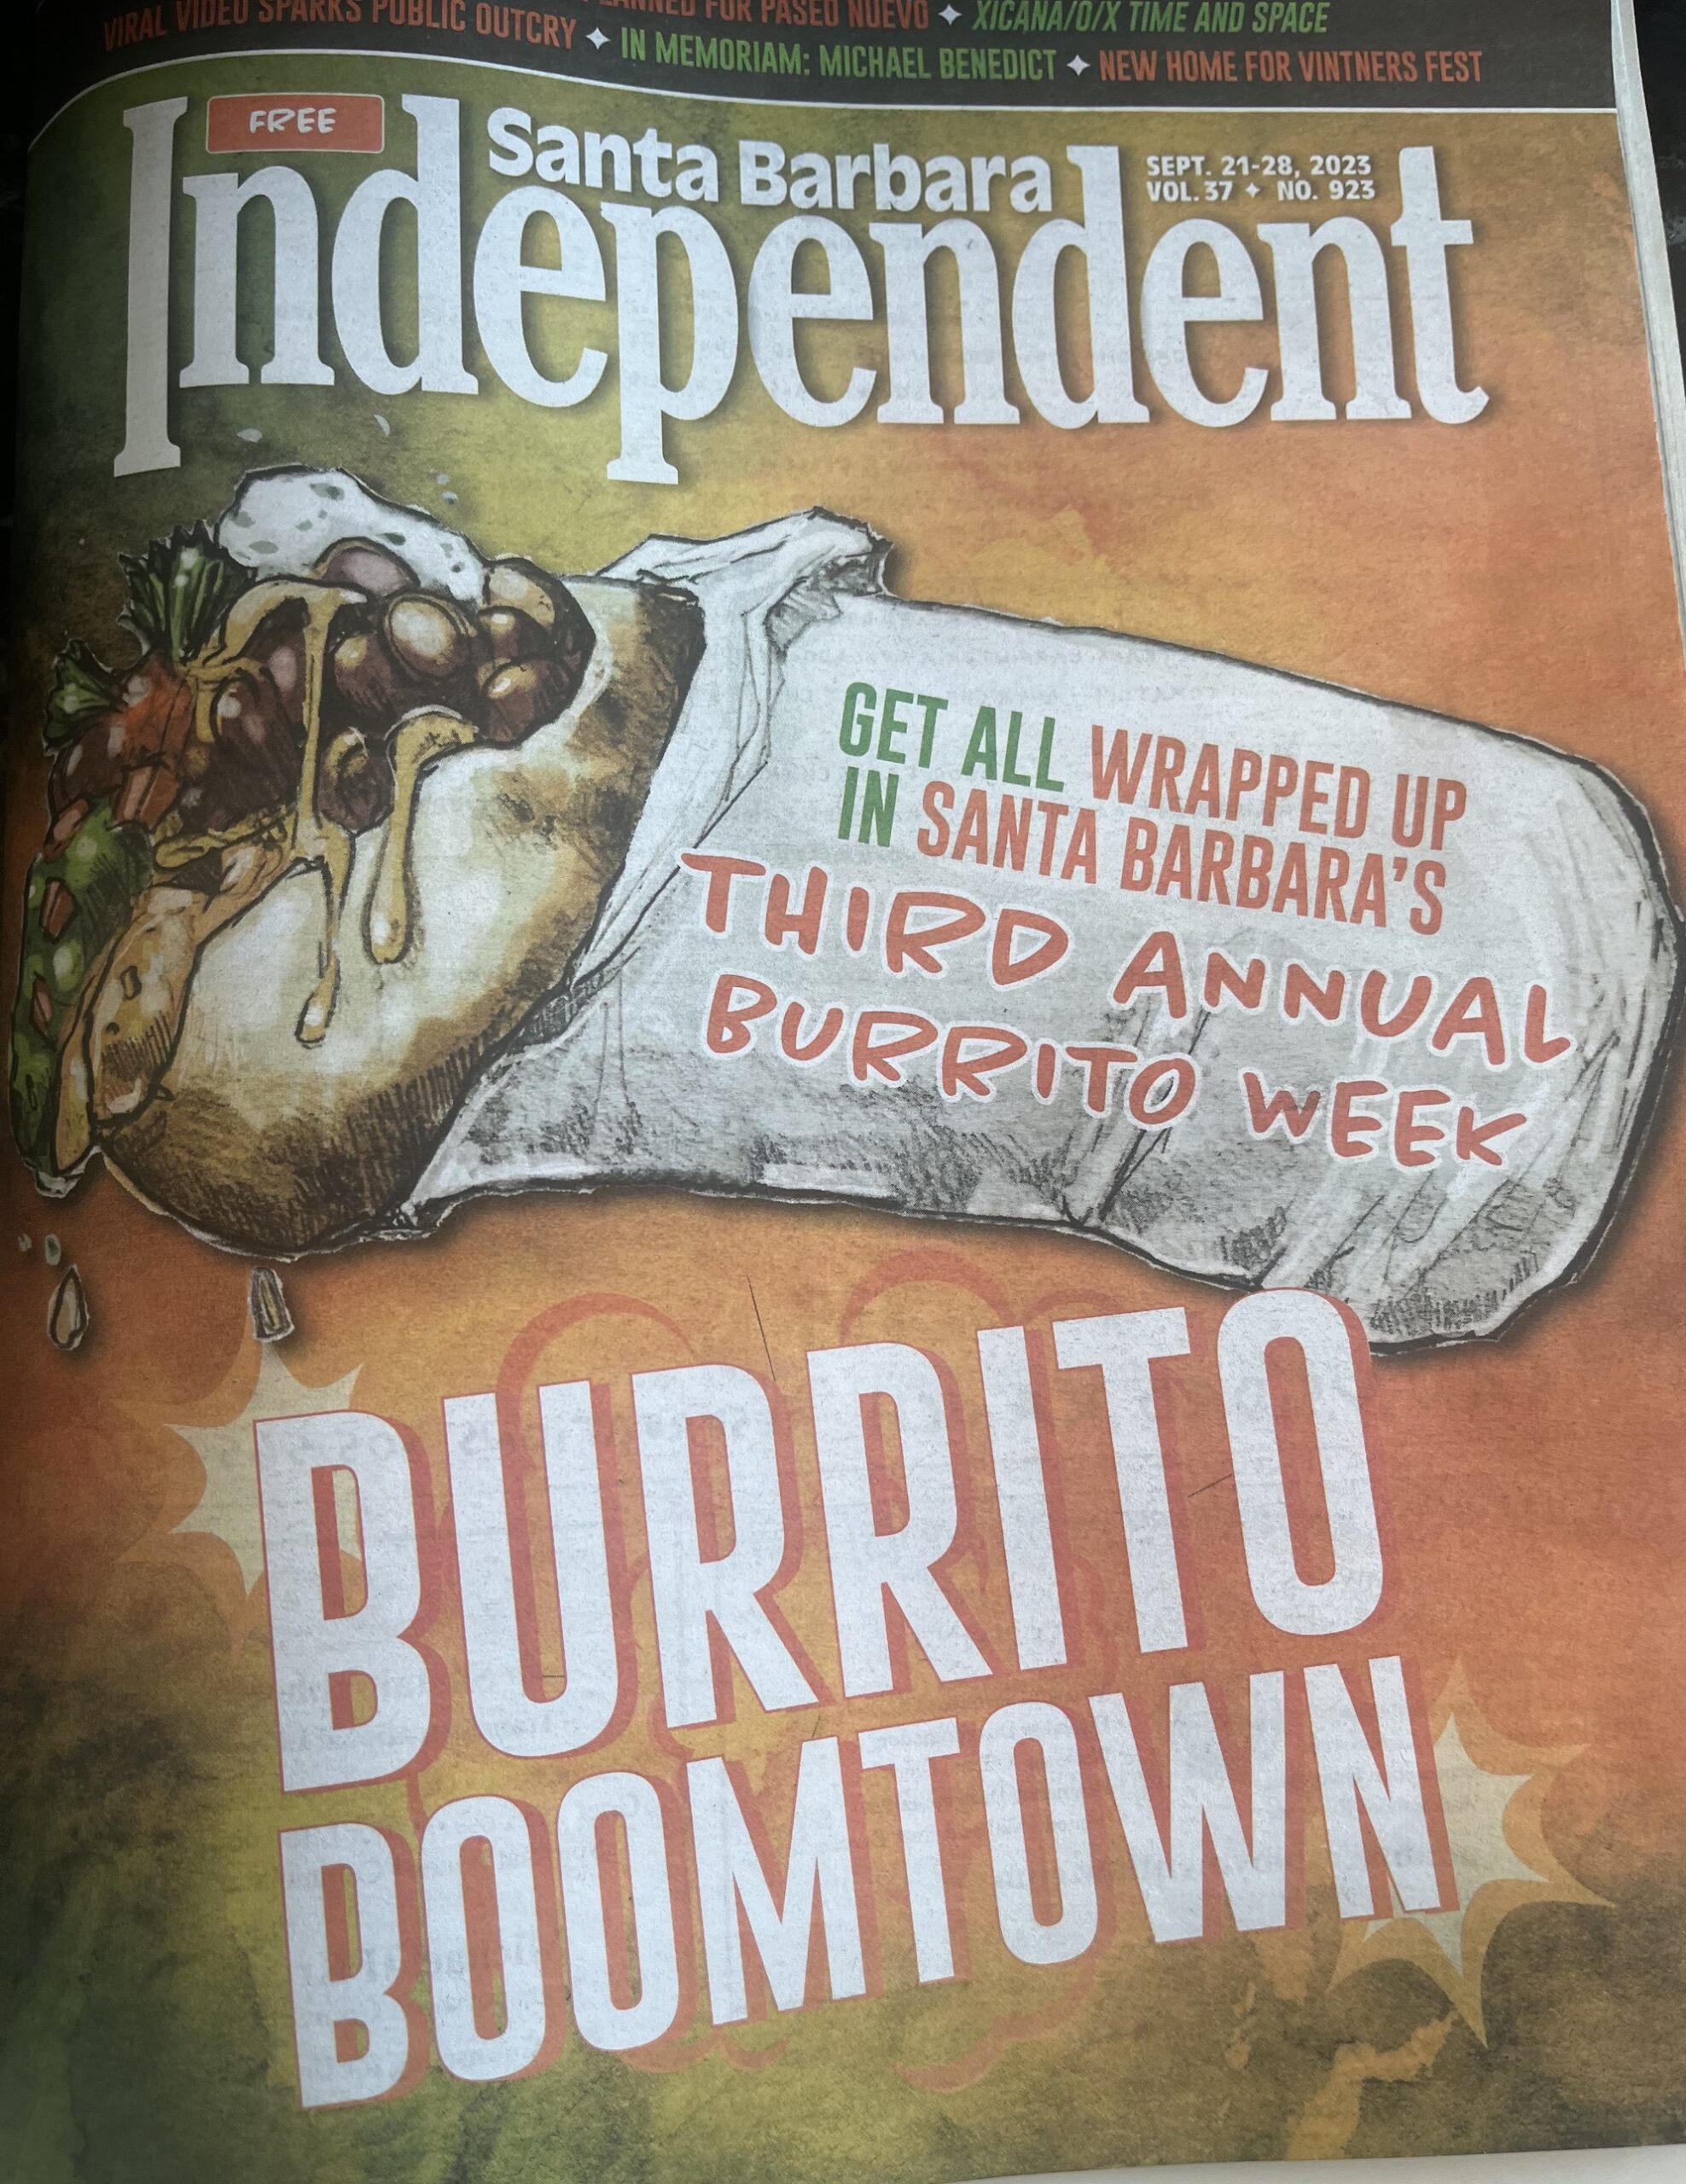 Santa Barbara Independent newspaper Burrito Week!